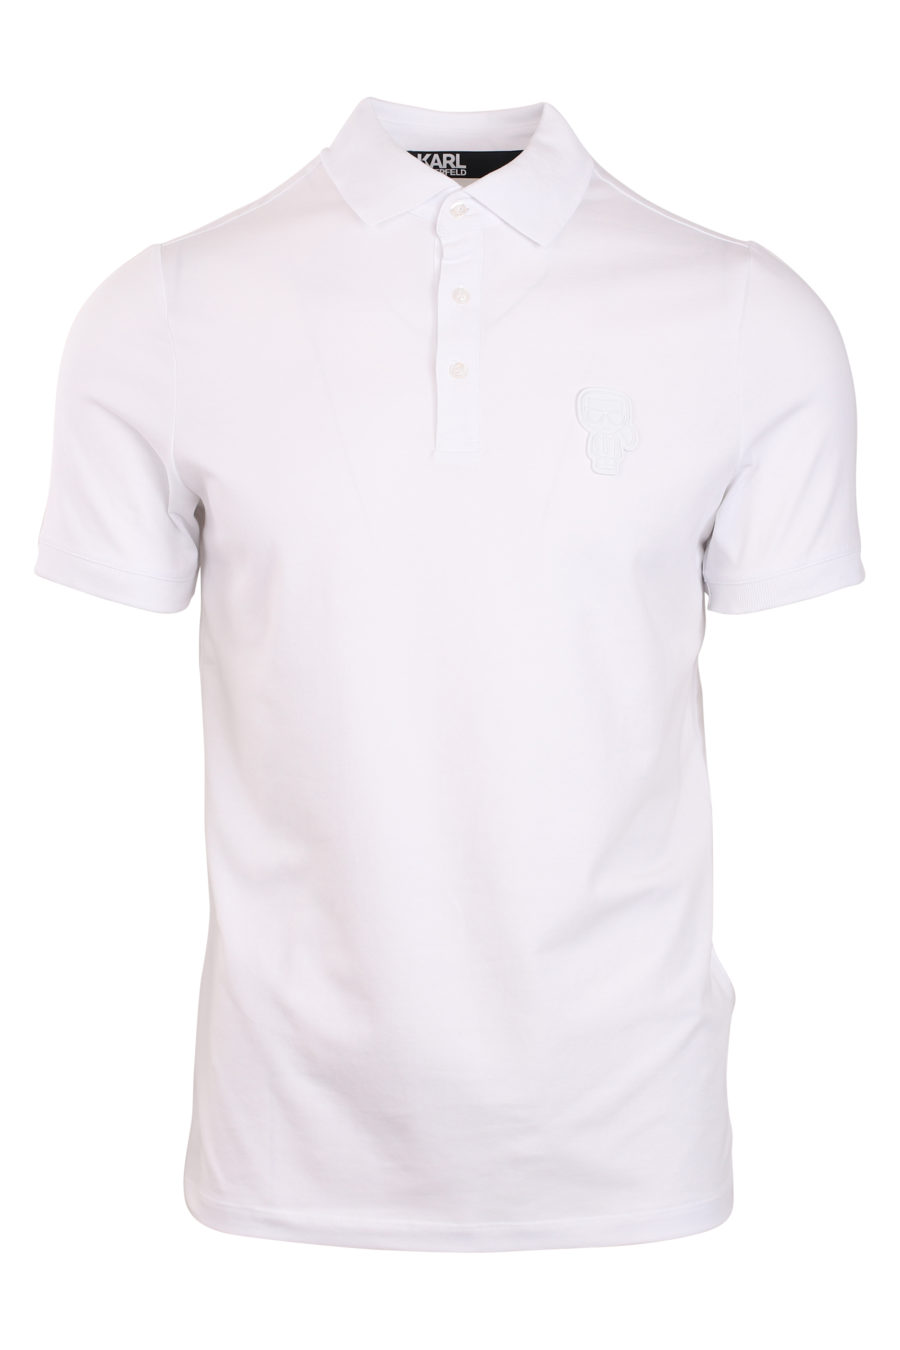 Weißes Poloshirt mit einfarbigem Logo - IMG 0853